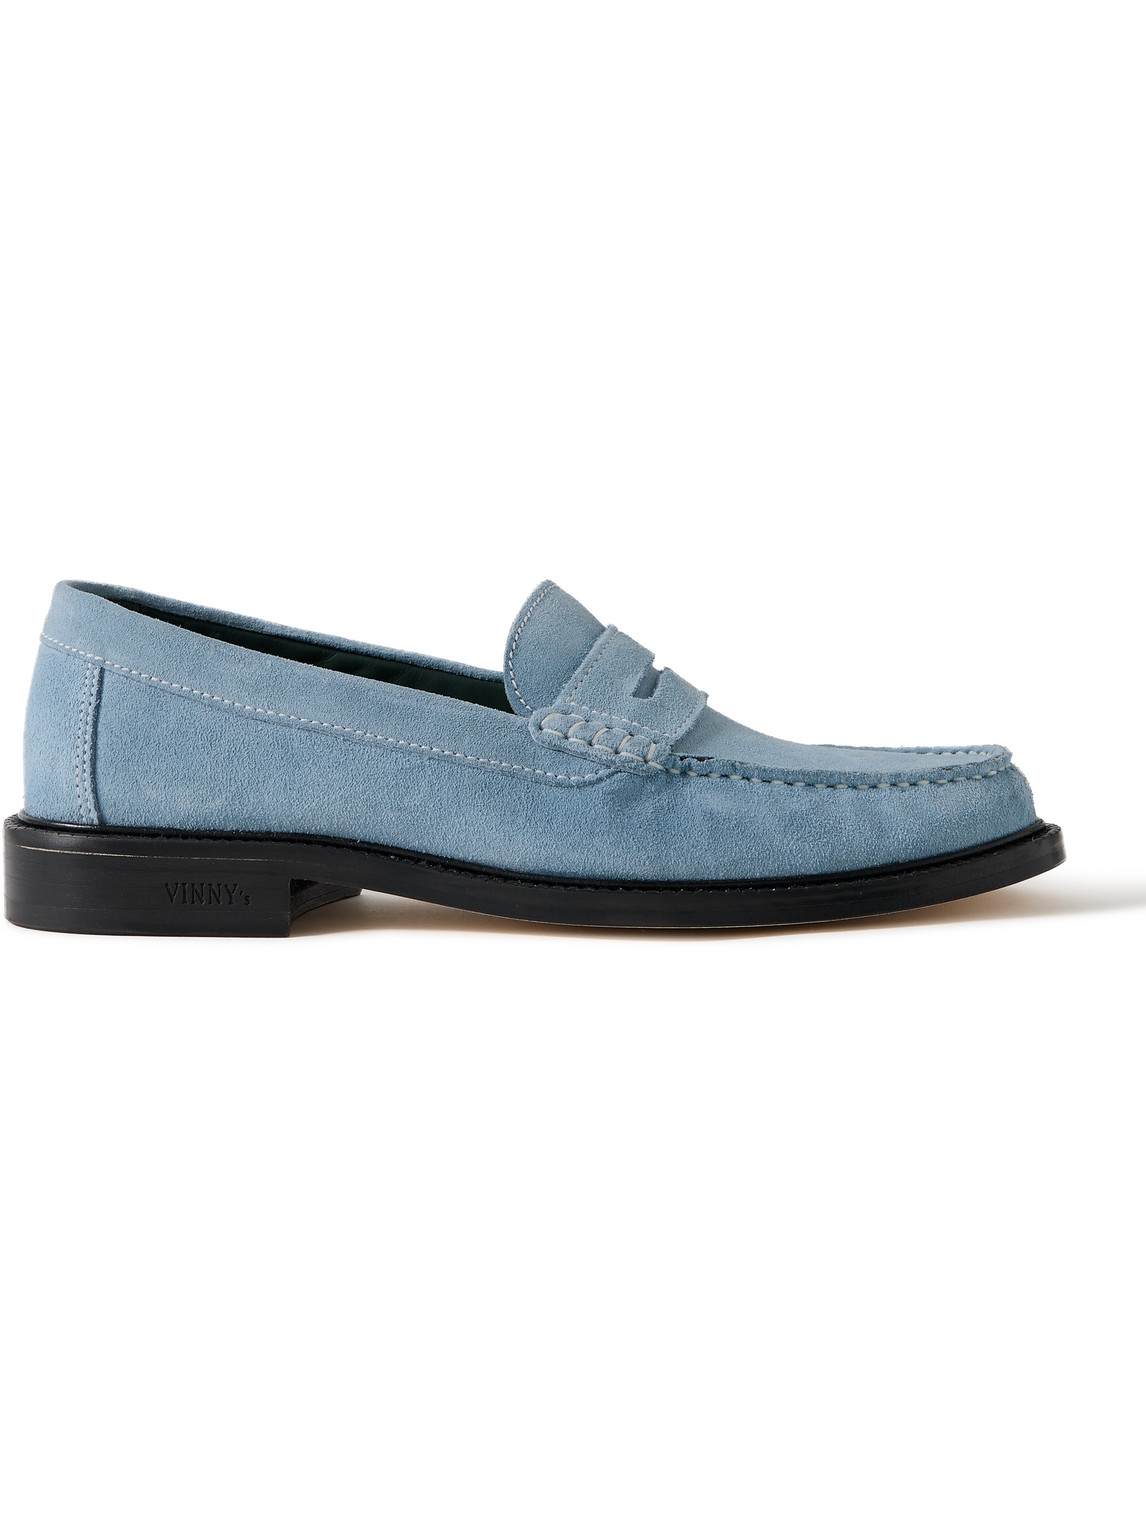 Vinny's Yardee Suede Penny Loafers In Blue